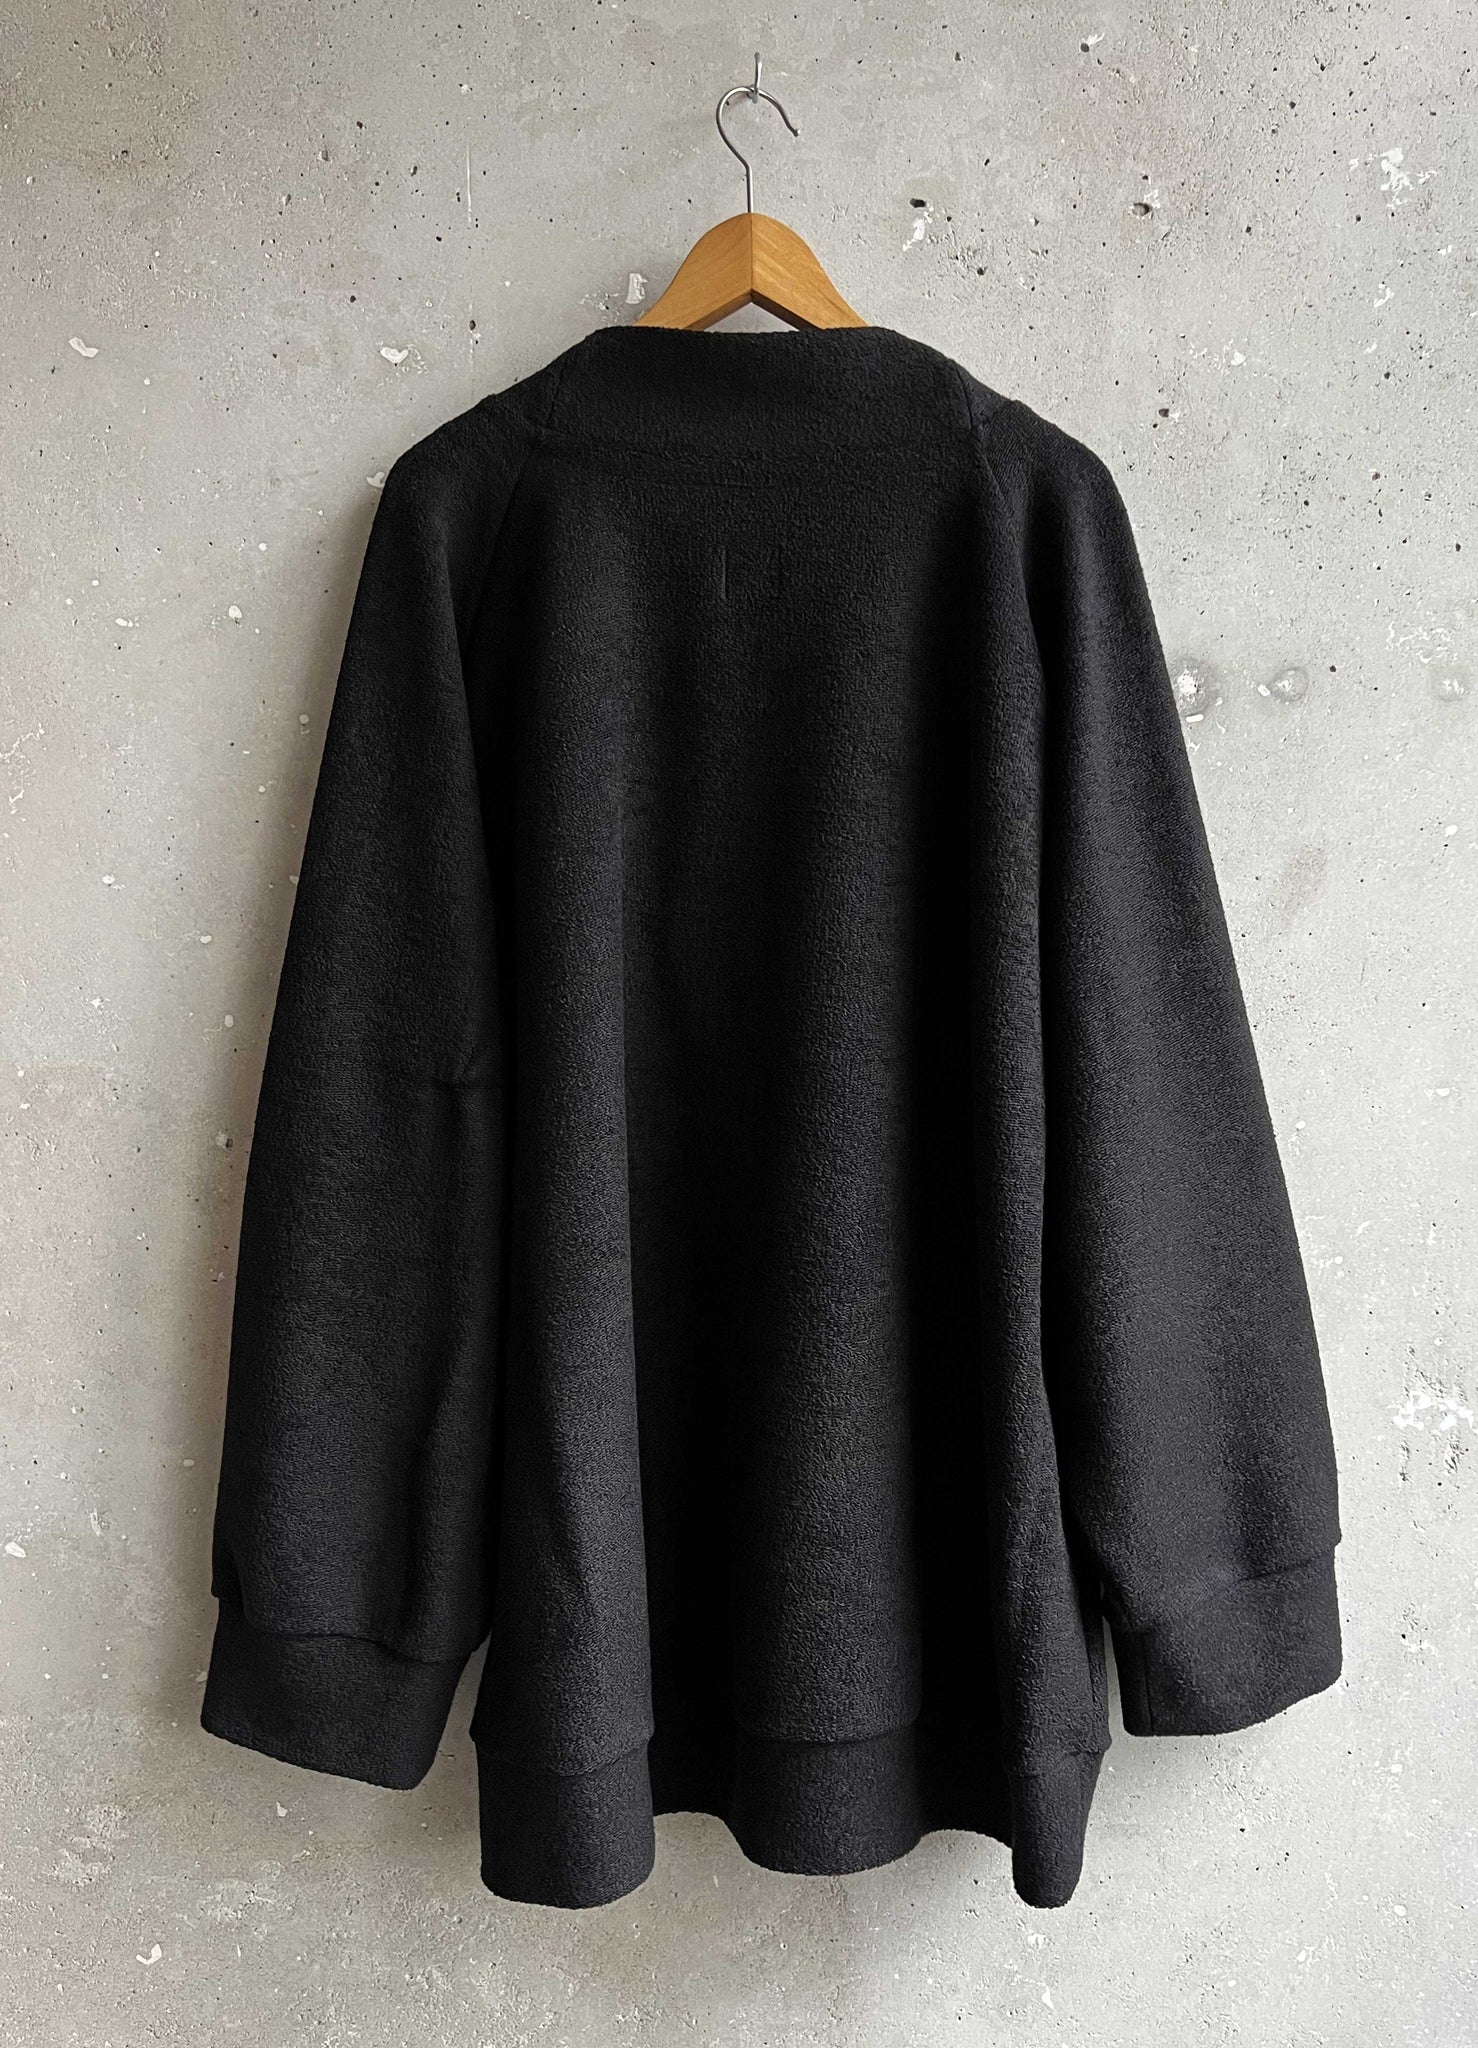 Cricket sweater black